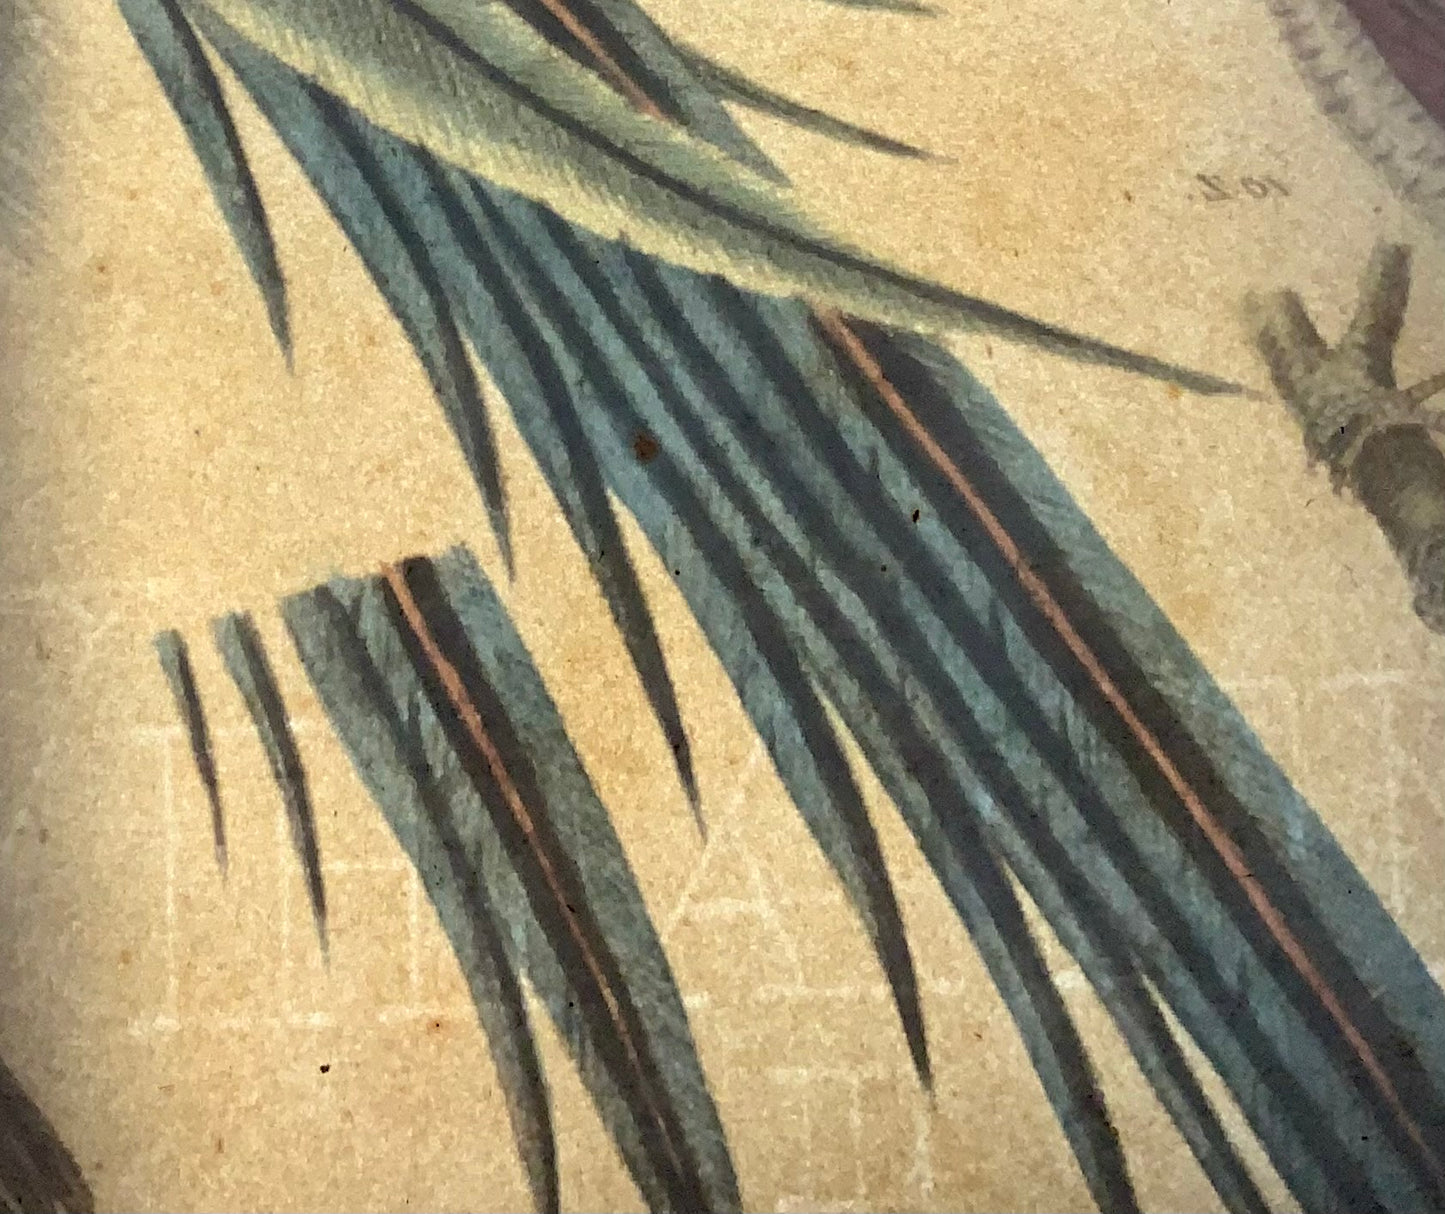 1819 Hoopoe, Bird of Paradise, ornithology, Strack, chalk lithograph hand colour